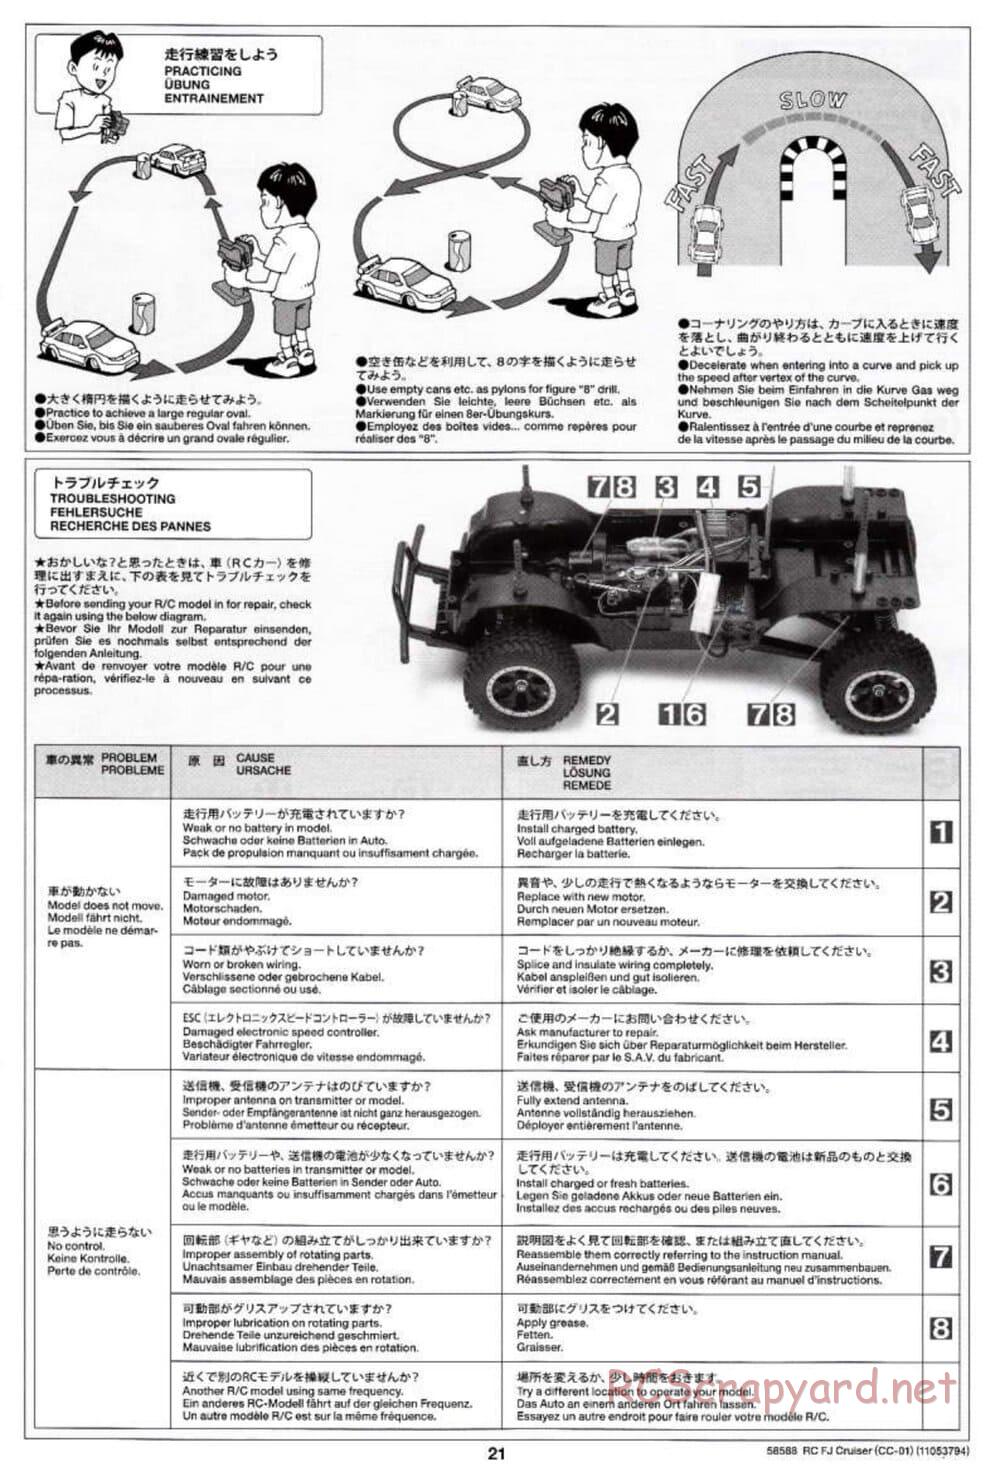 Tamiya - Toyota FJ Cruiser - CC-01 Chassis - Manual - Page 21